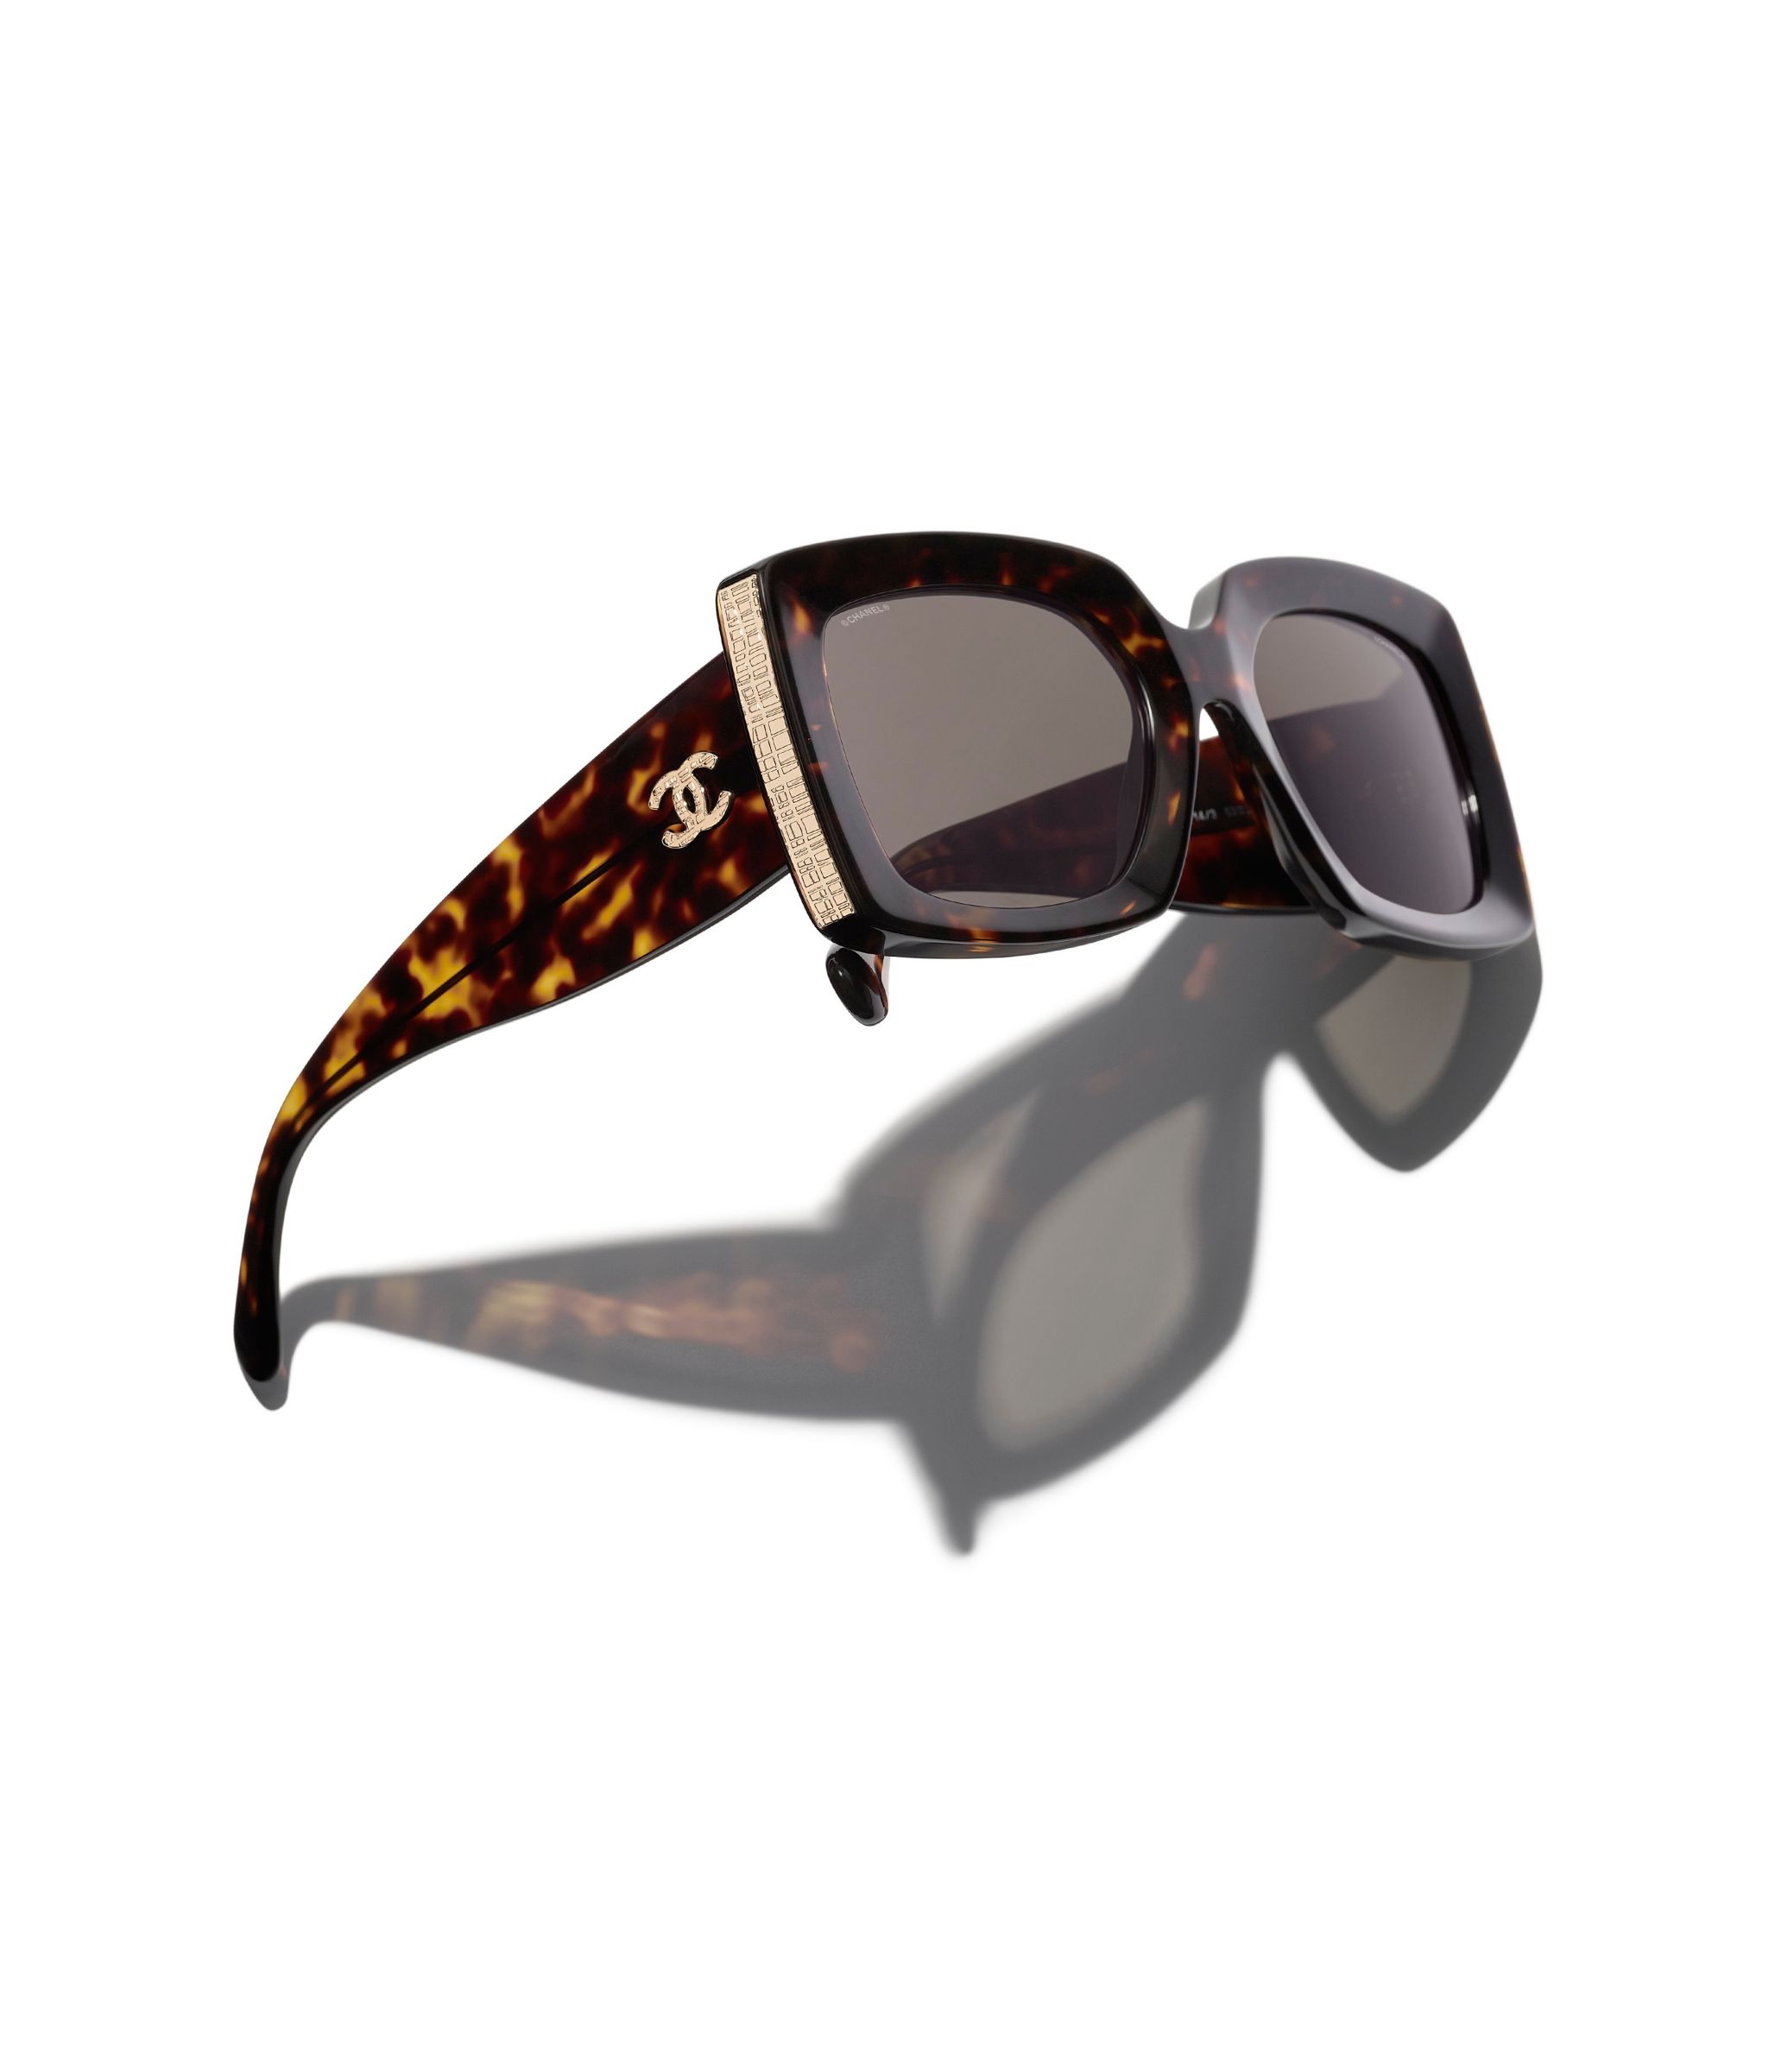 Sunglasses: Square Sunglasses, acetate, metal & calfskin — Fashion